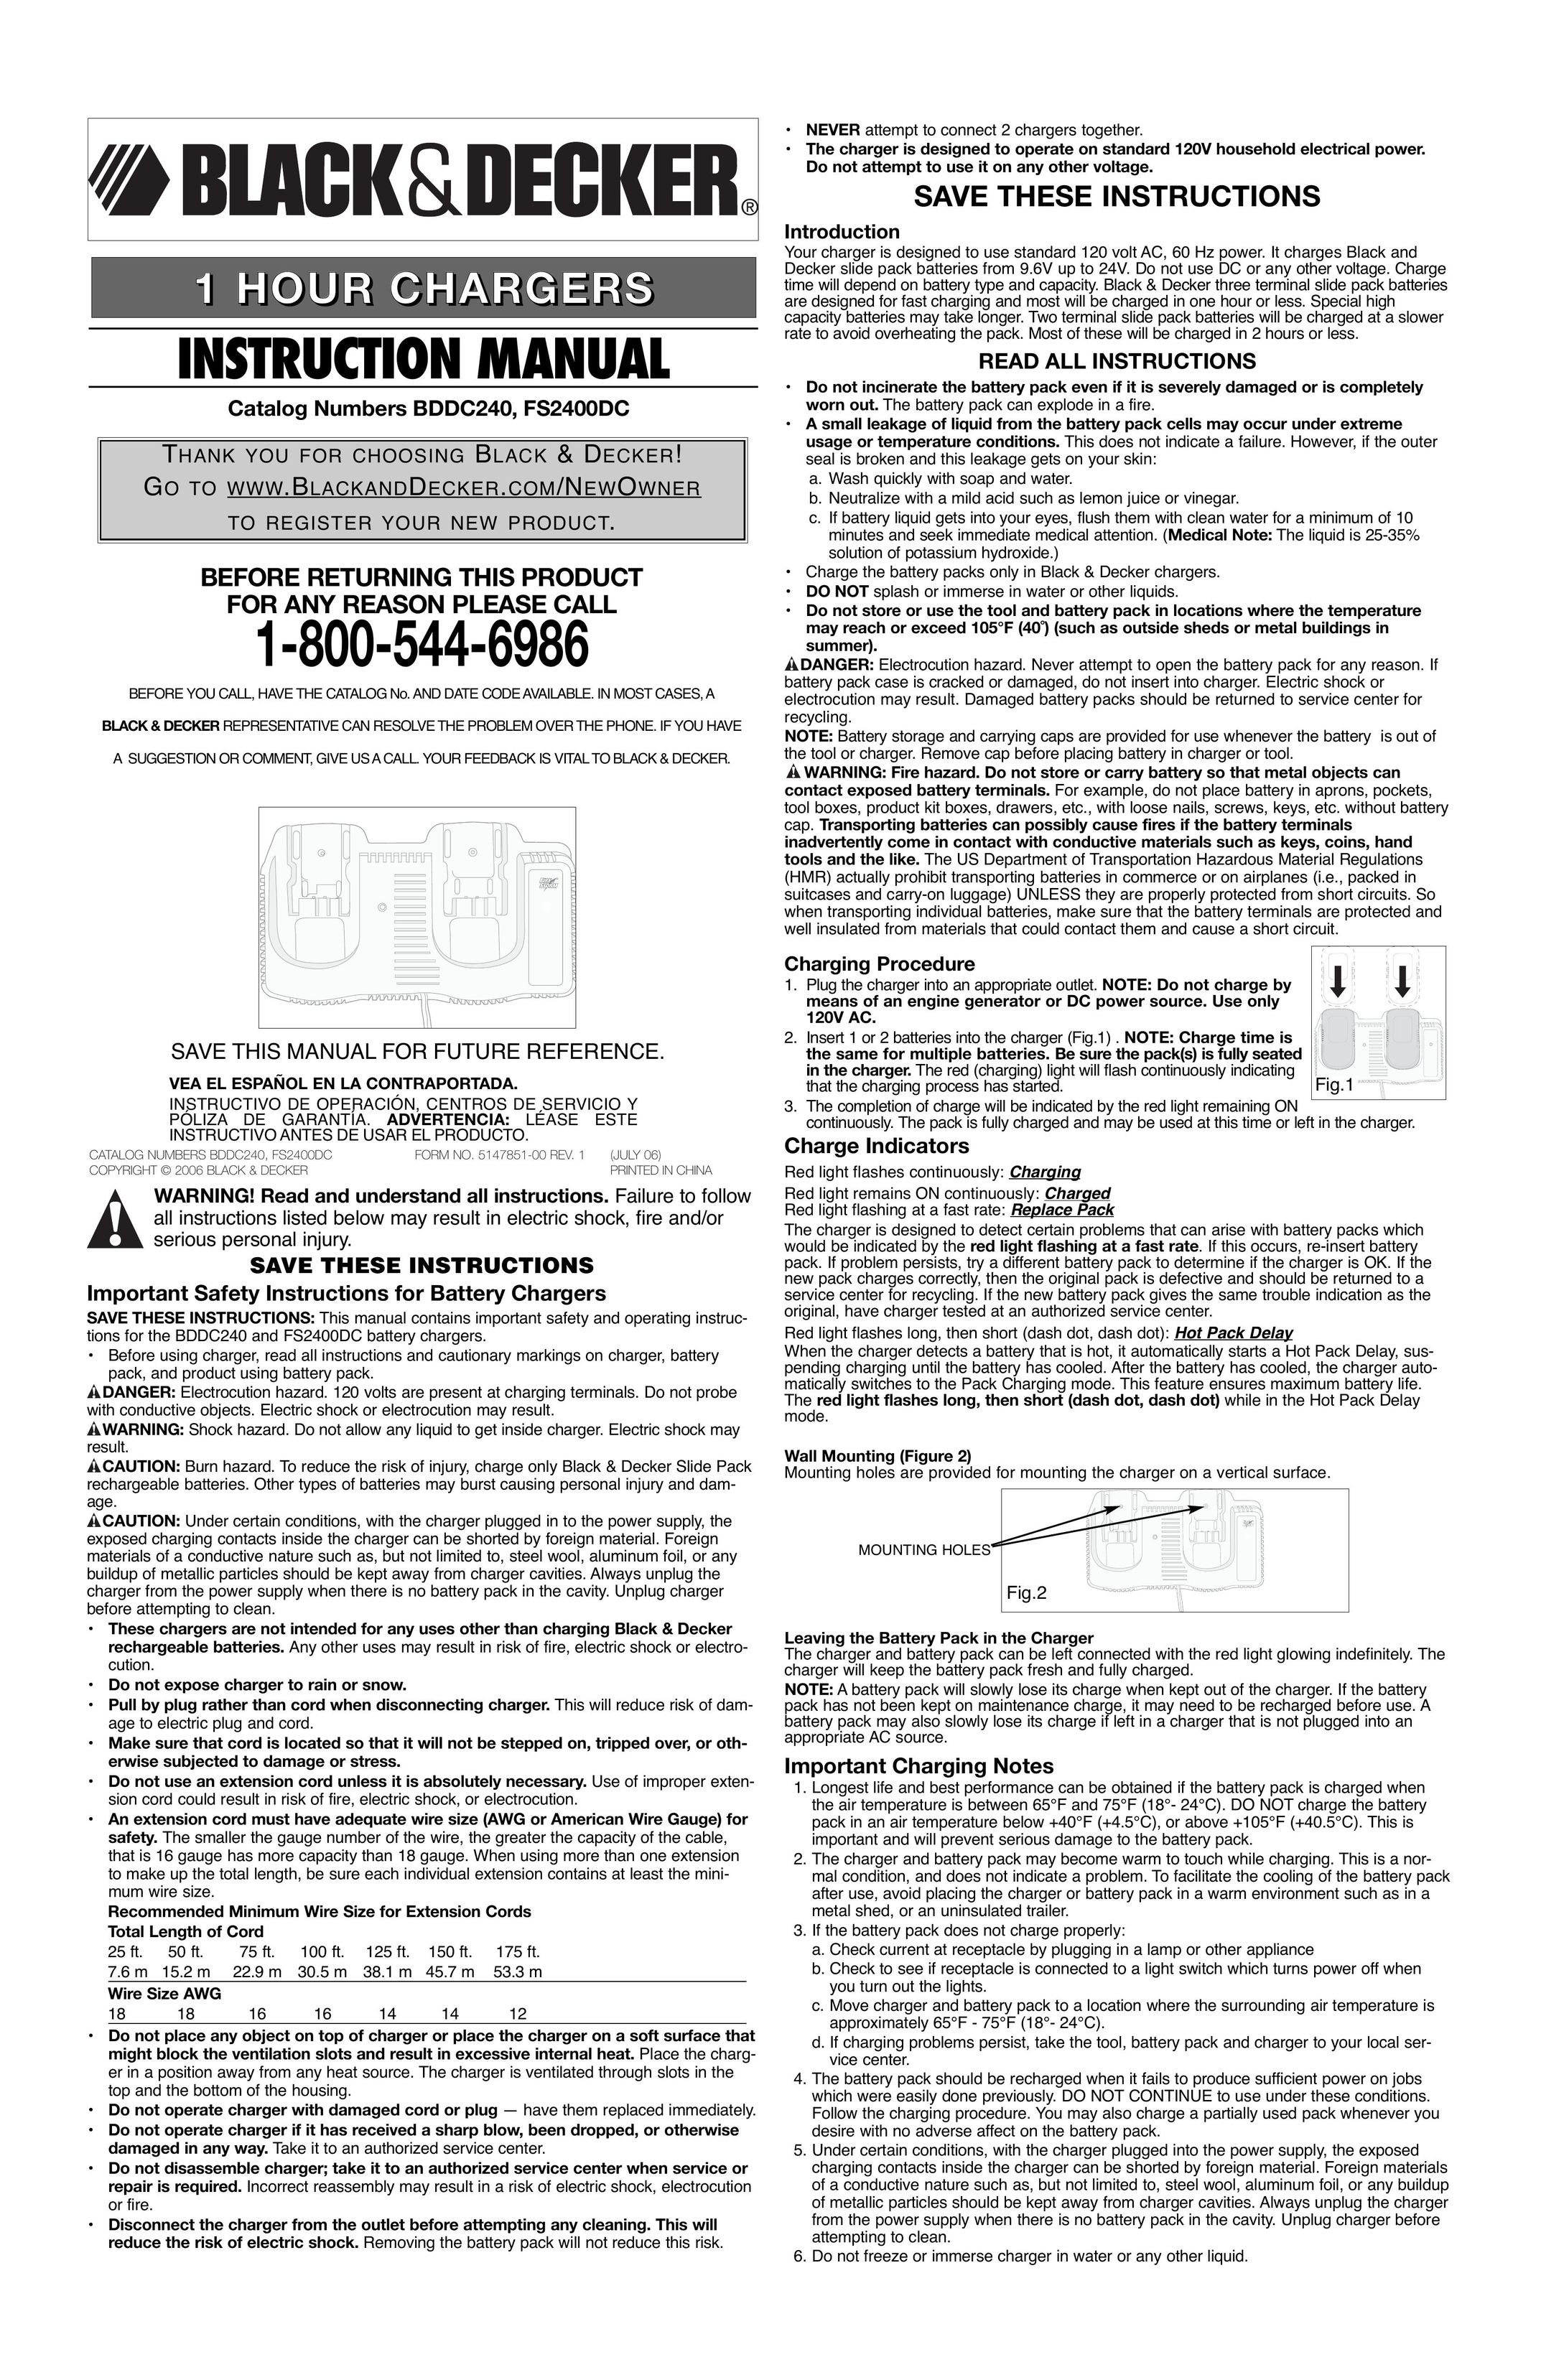 Black & Decker FS2400DC Battery Charger User Manual